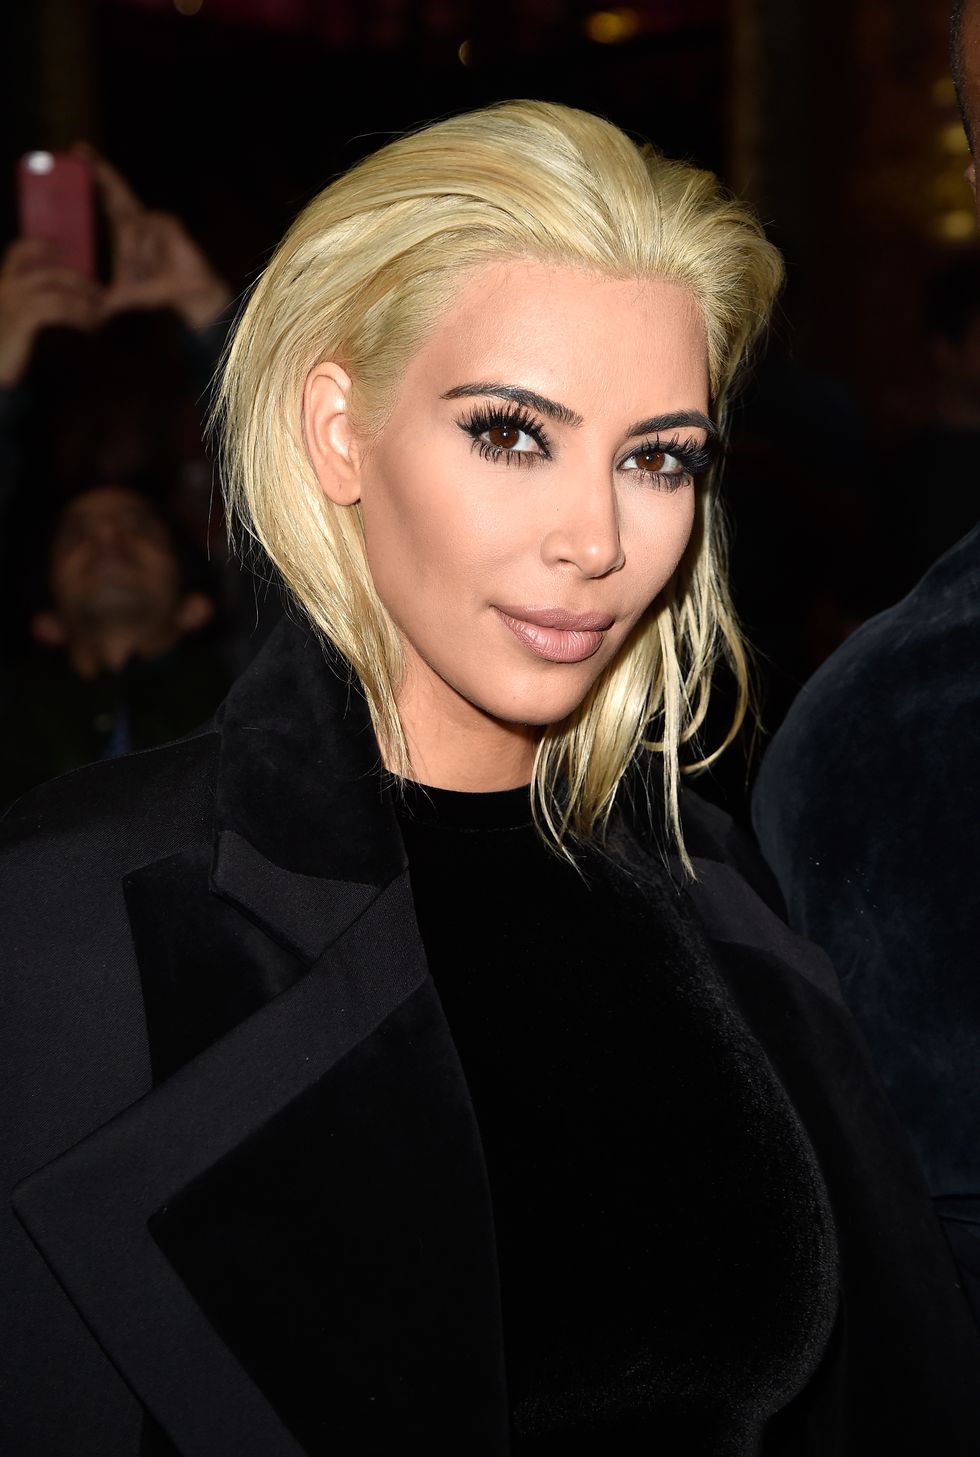 Kim Kardashian has already styled her blonde hair multiple ways